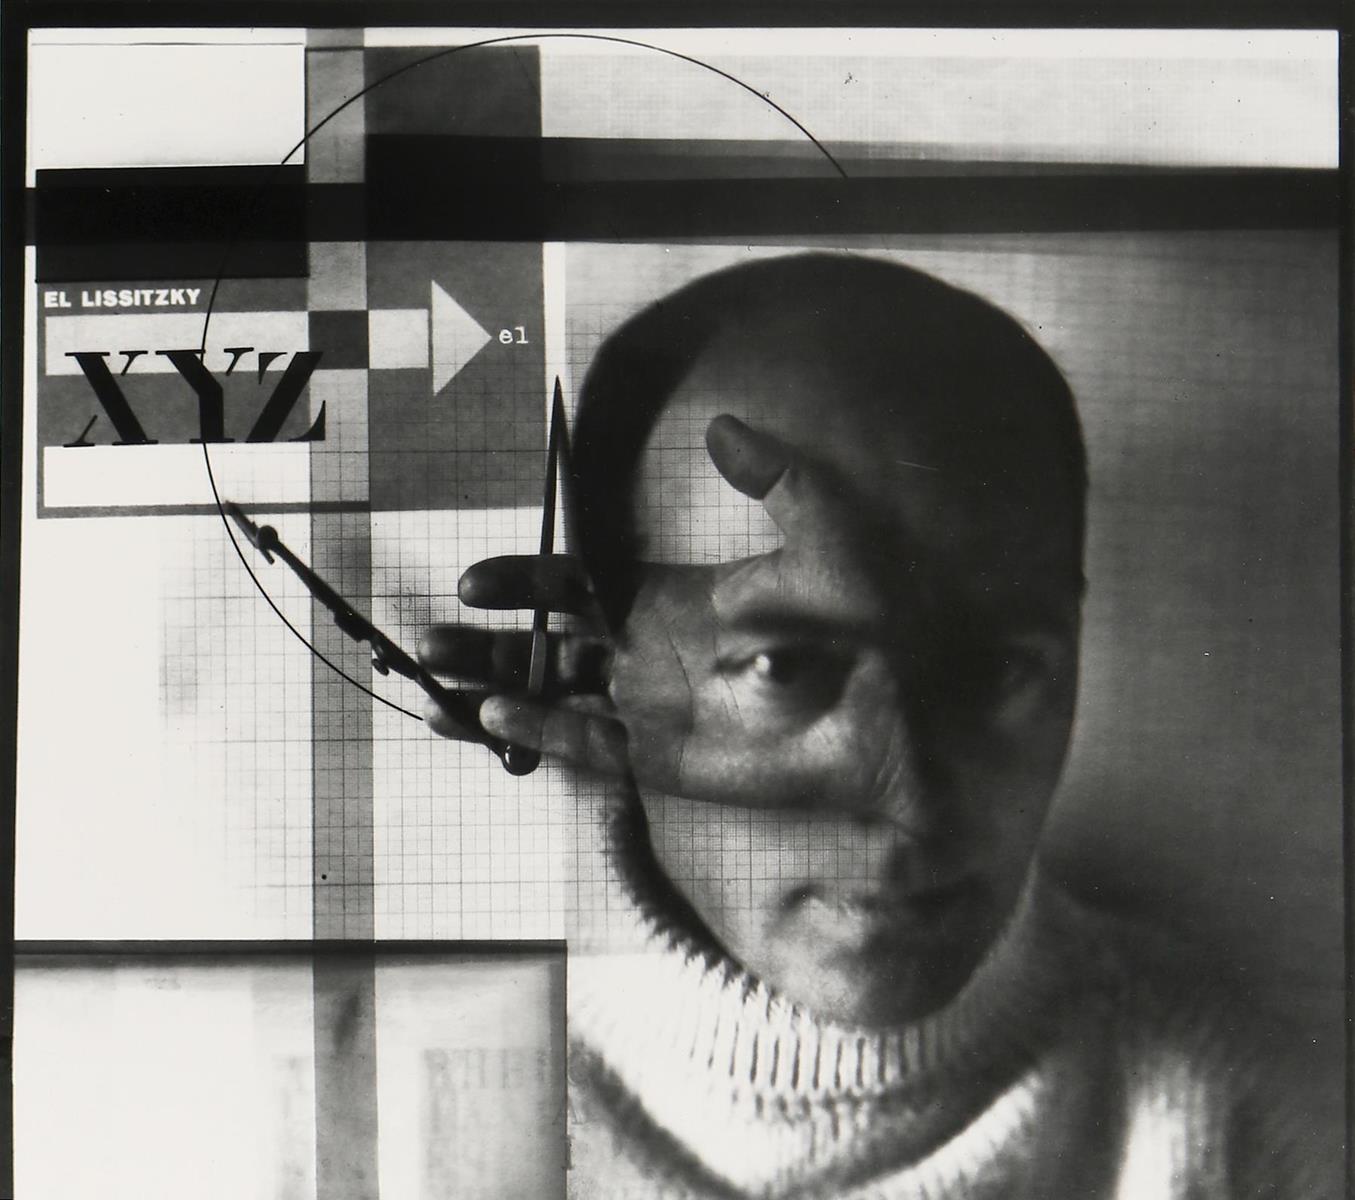 Lissitzky, El (eig. Eliezier, | Bild Nr.1